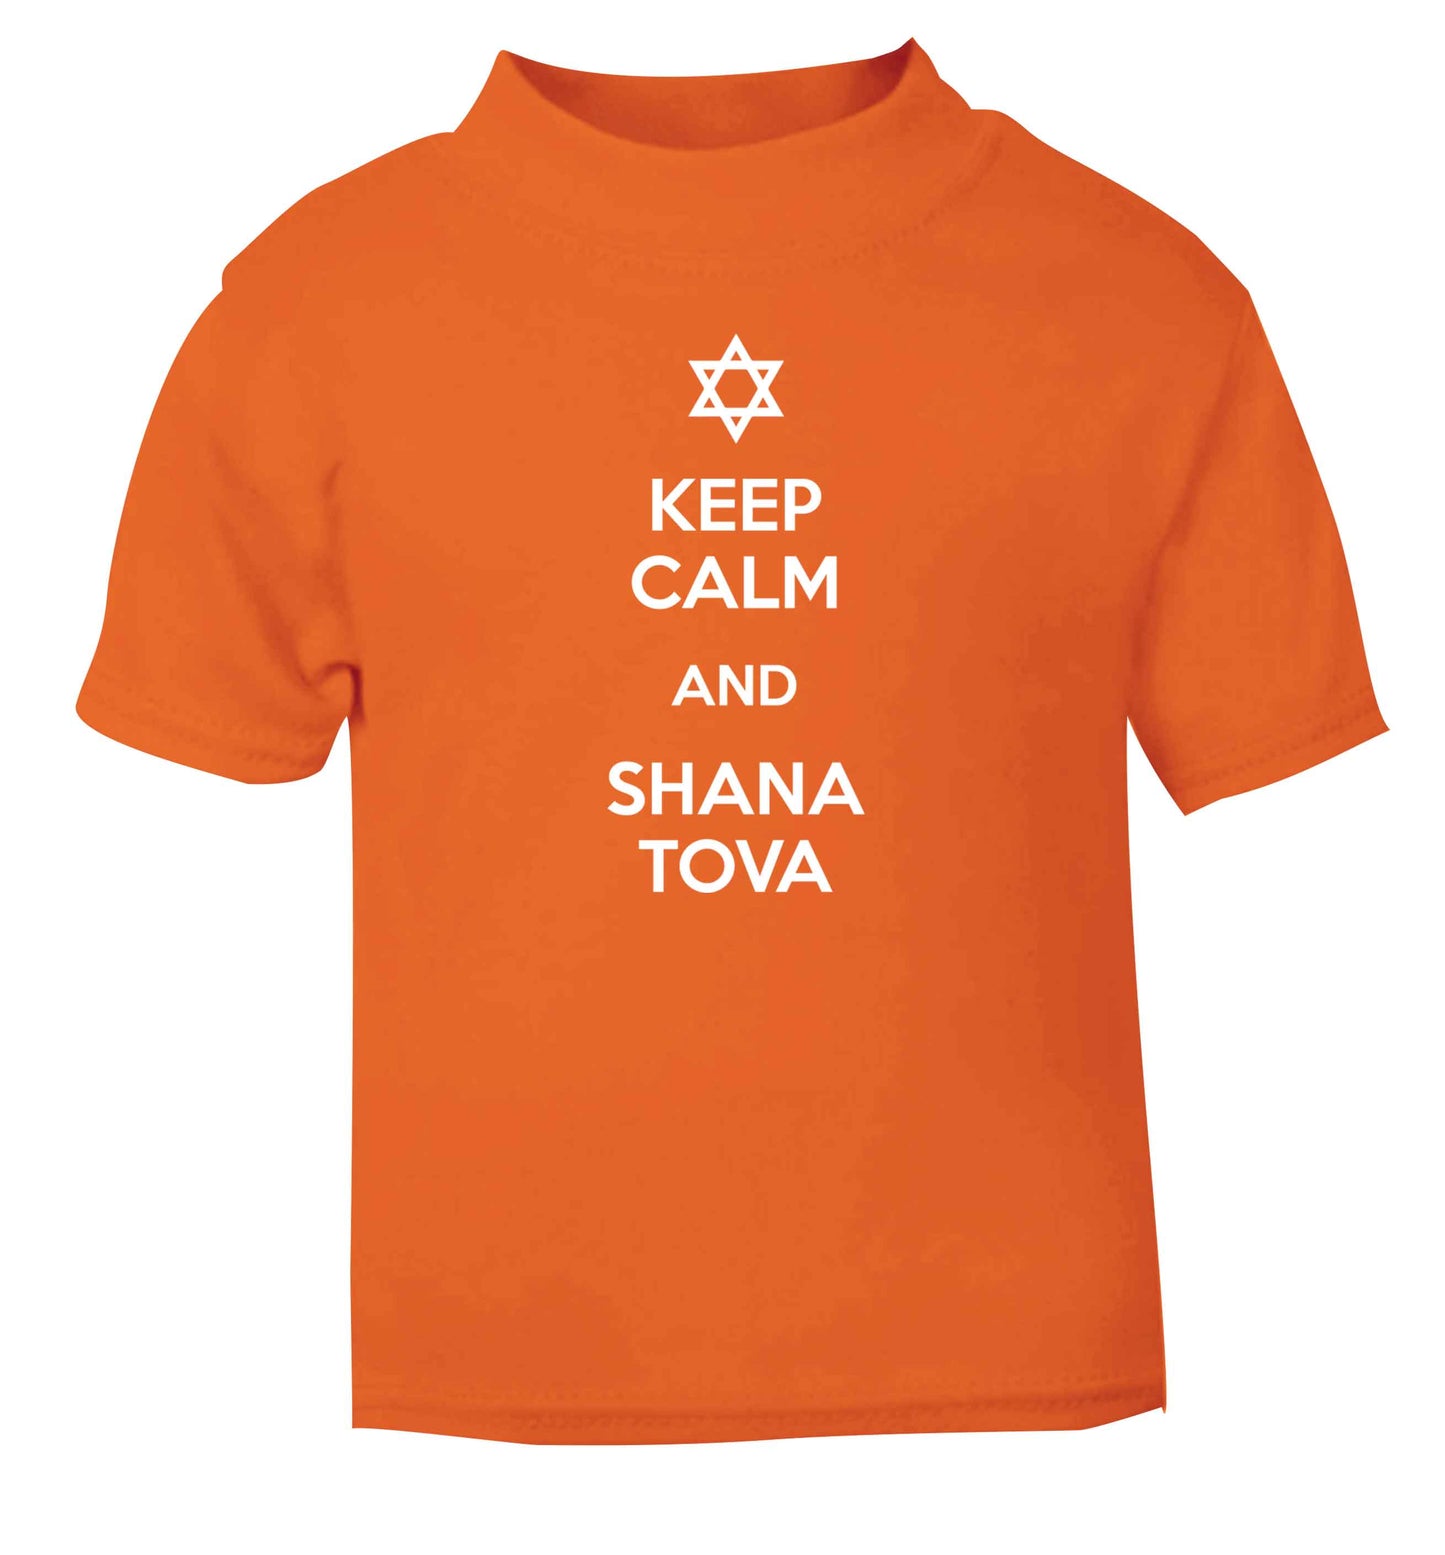 Keep calm and shana tova orange Baby Toddler Tshirt 2 Years